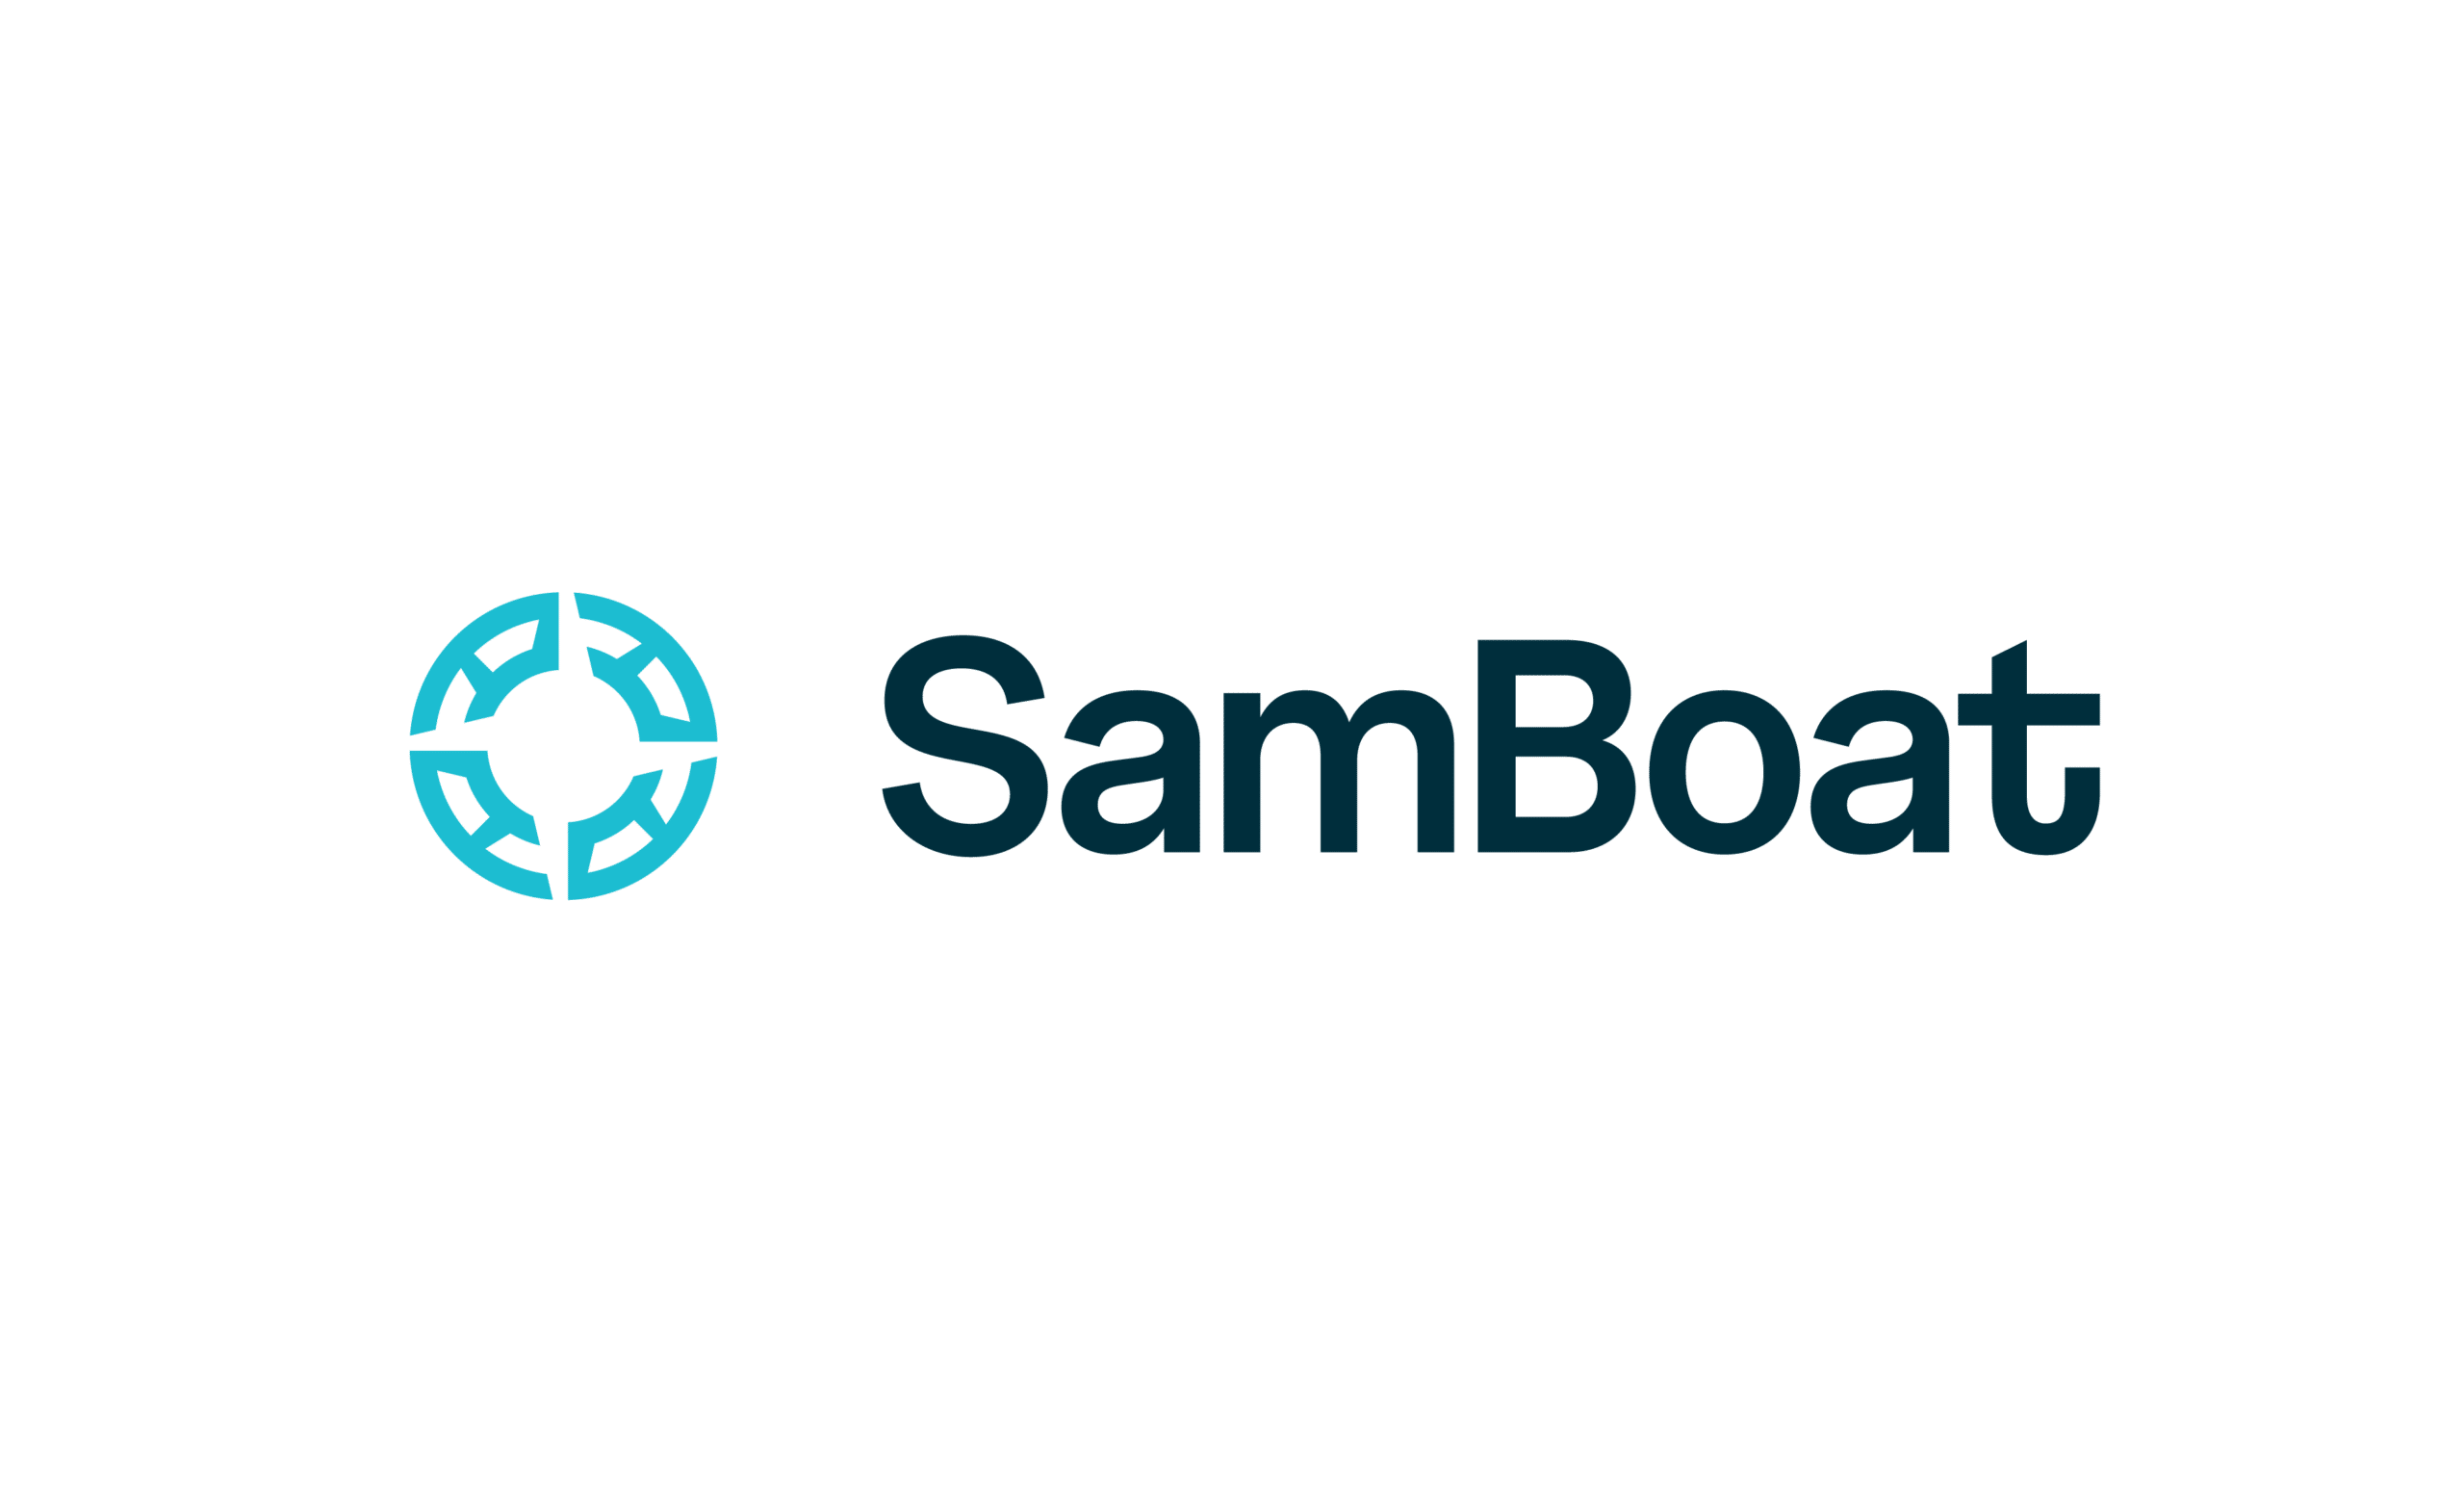 logo Samboat